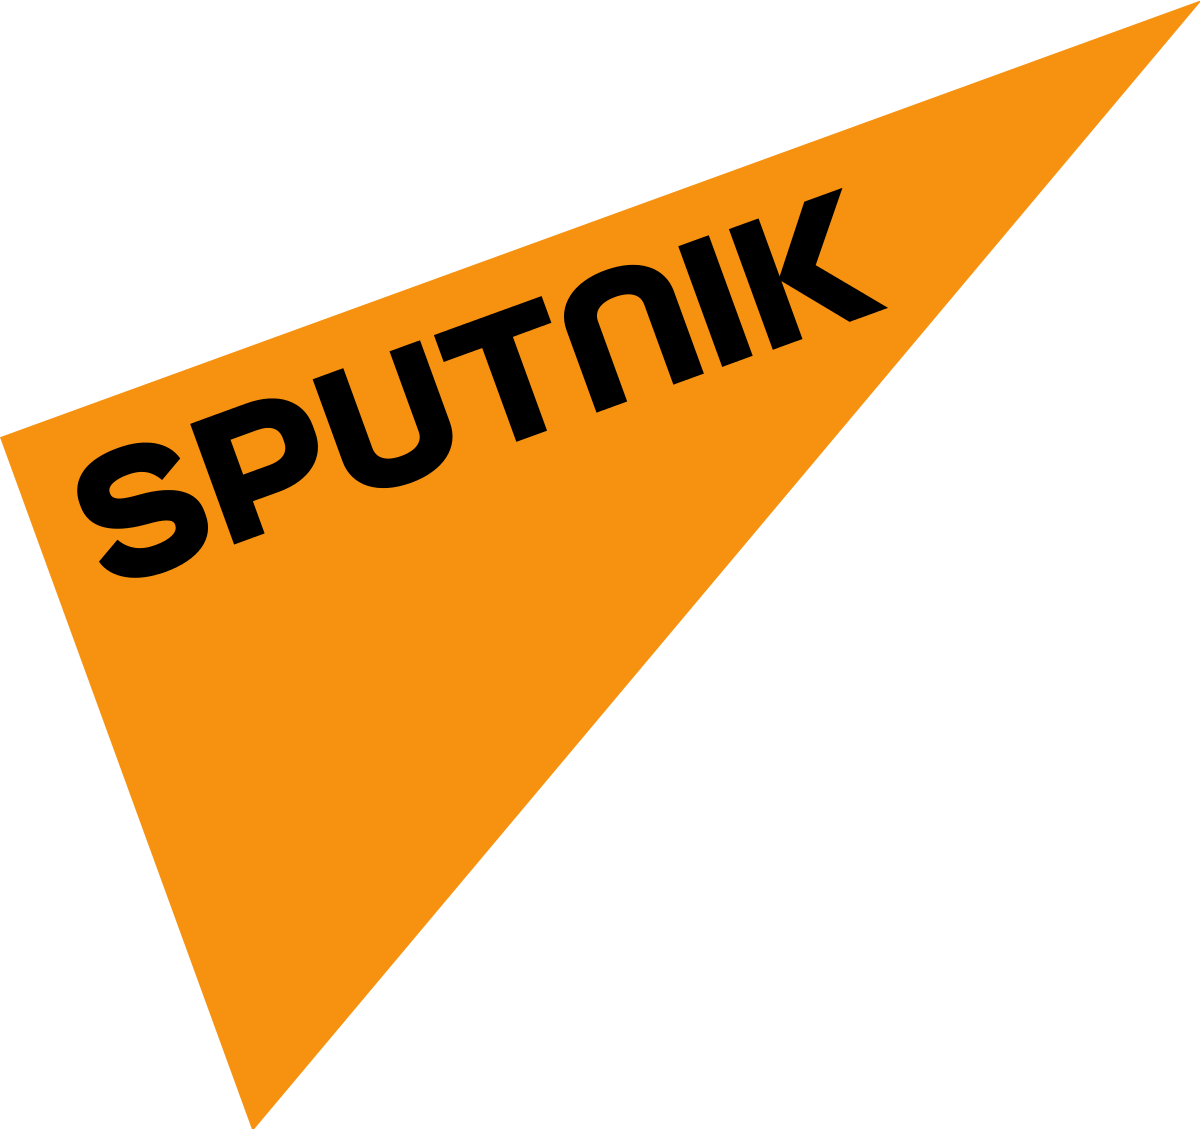 Sputnik Arabic